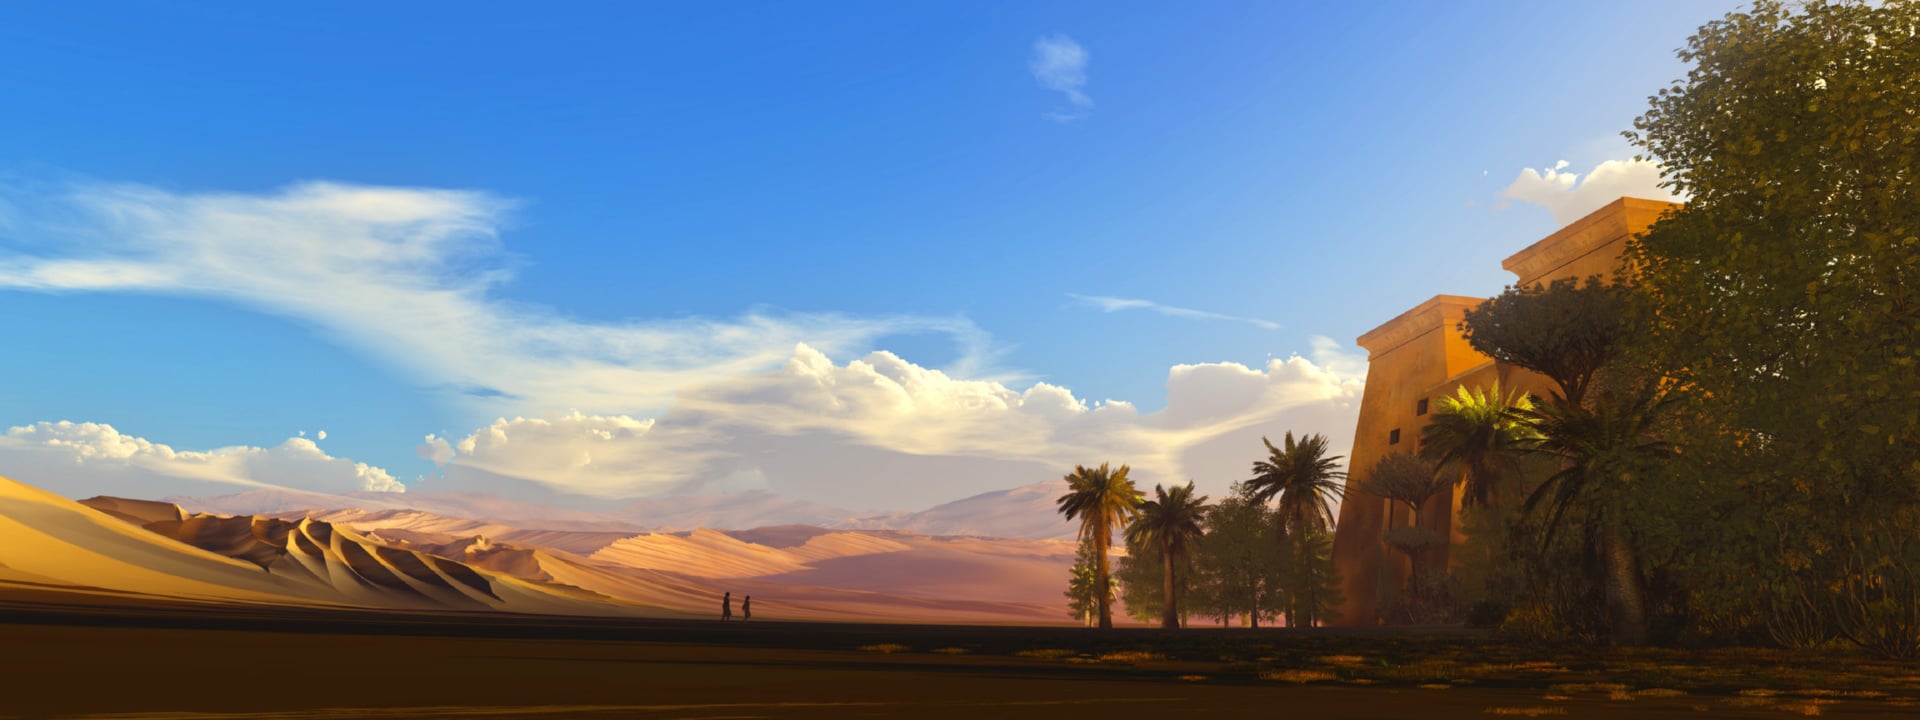 Digital Art Desert at 1024 x 1024 iPad size wallpapers HD quality